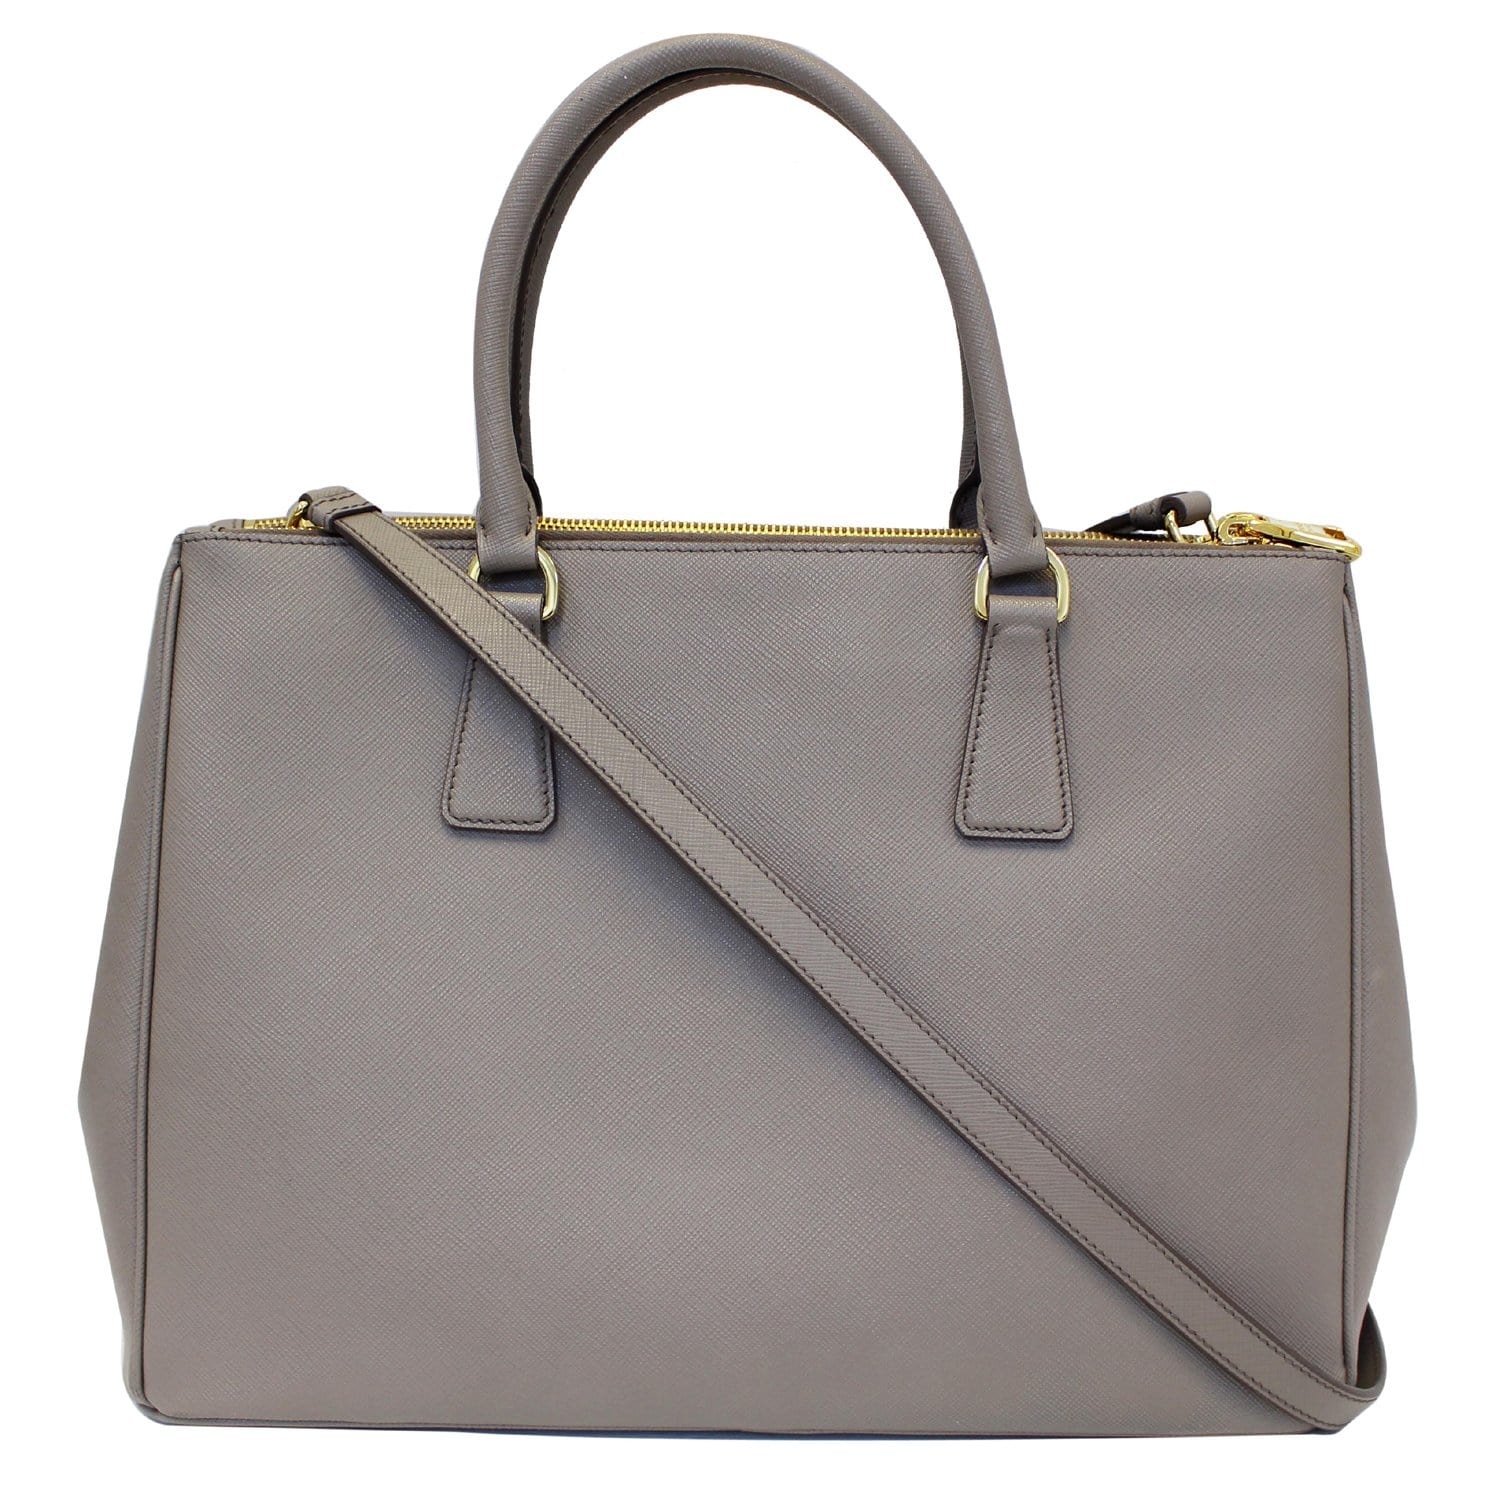 Prada - Women's Medium Galleria Saffiano Bag Tote - Gray - Leather